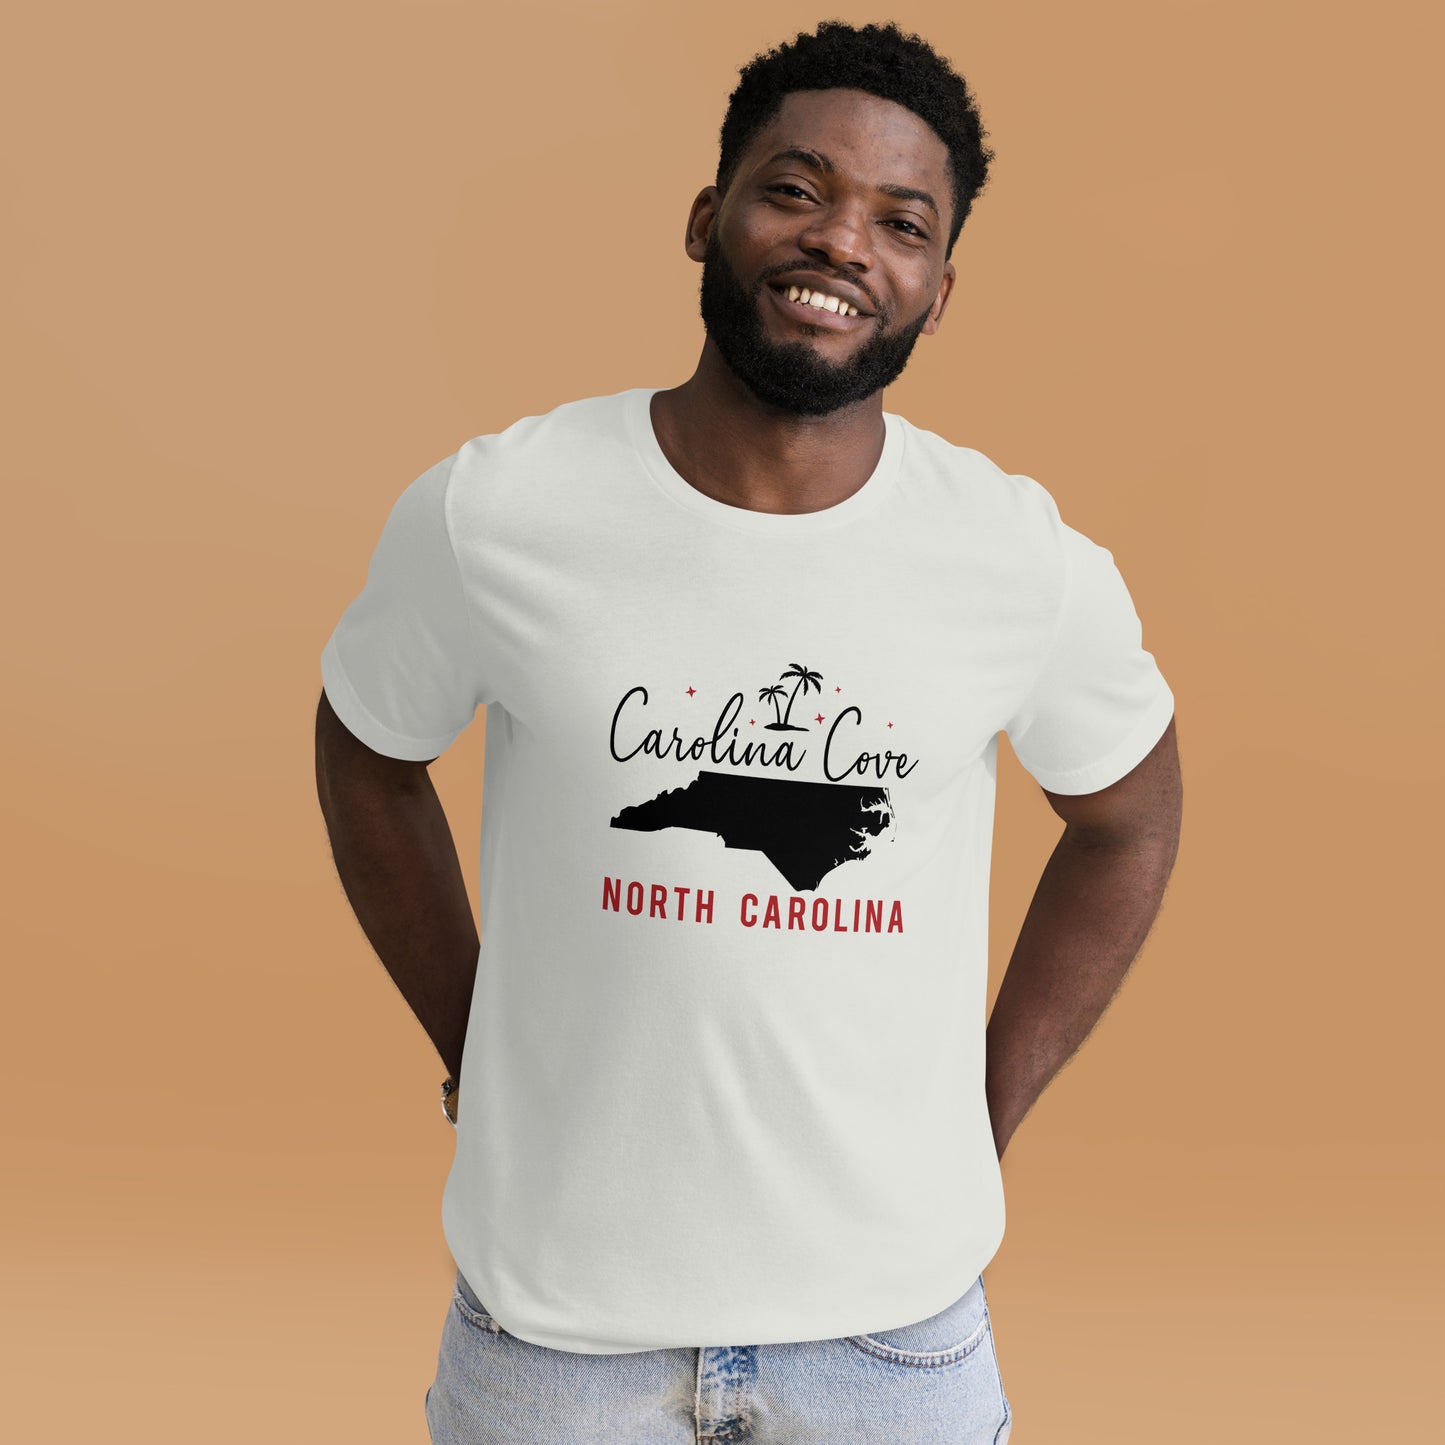 Unisex t-shirt (FEATURING CAROLINA COVE, NORTH CAROLINA)